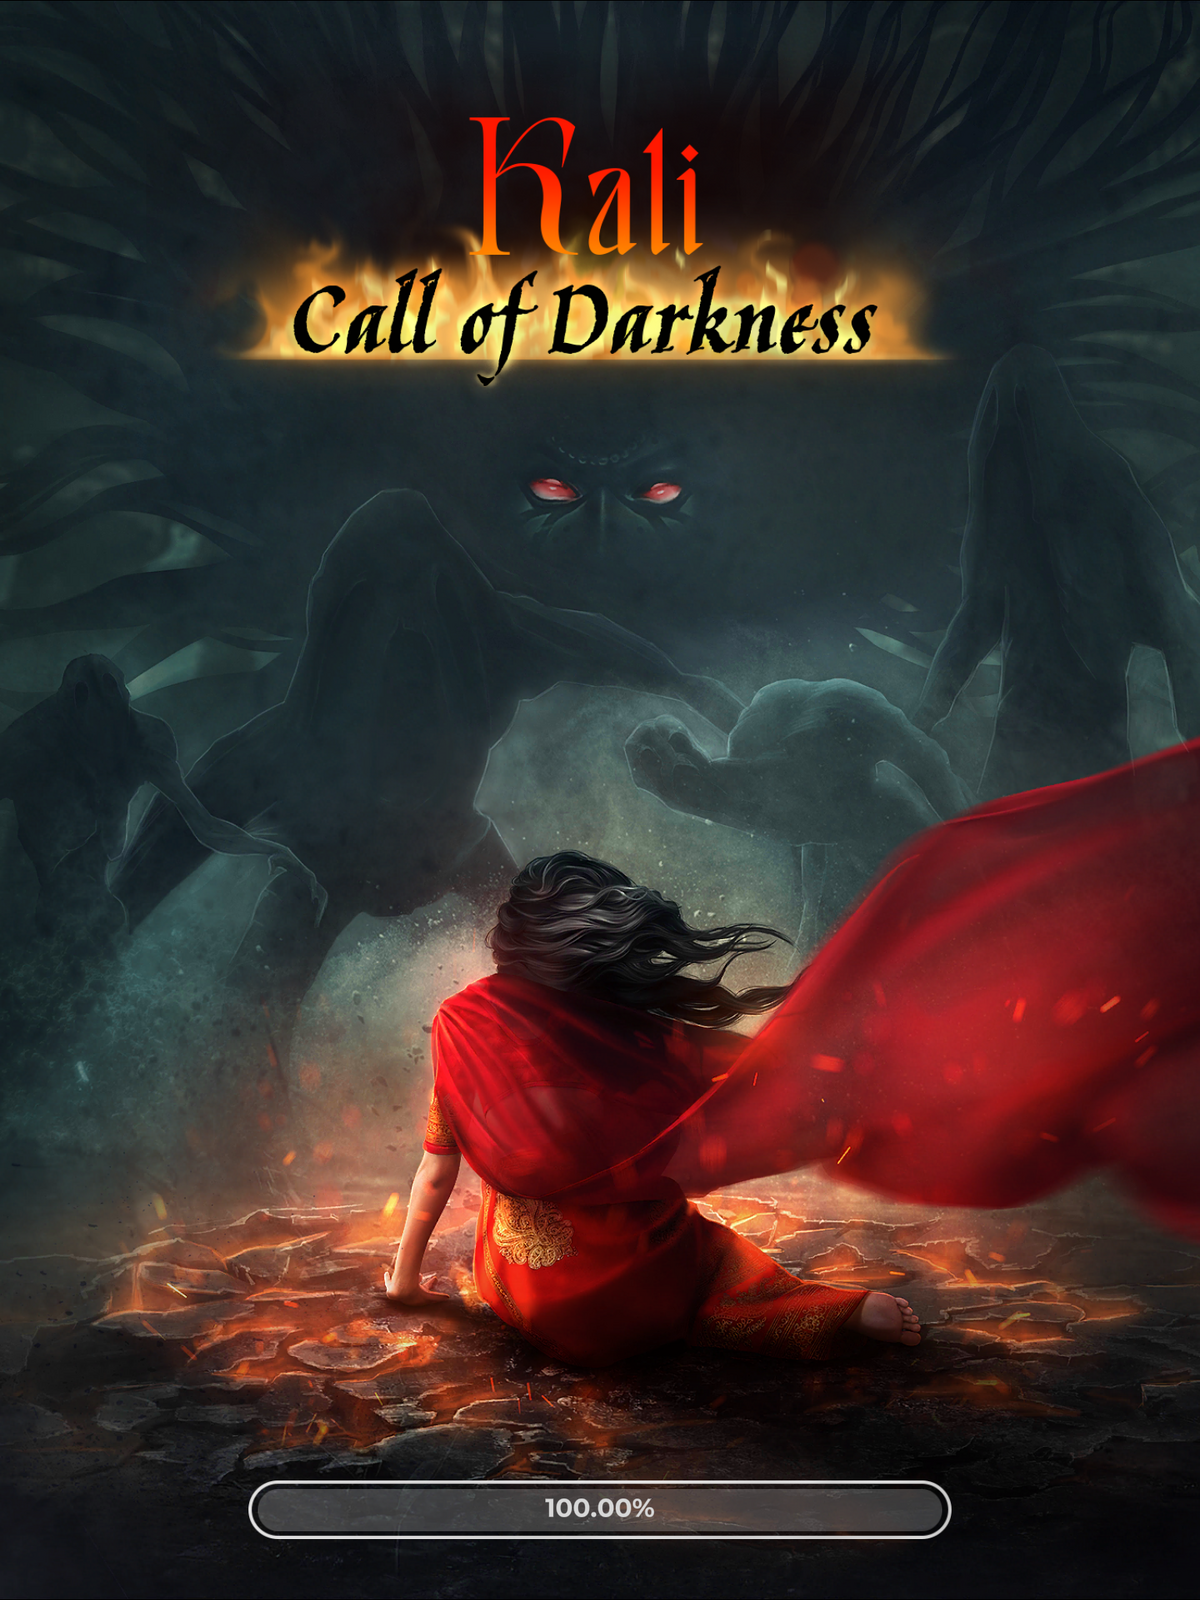 Kali: Call of Darkness Season 2 walkthroughs